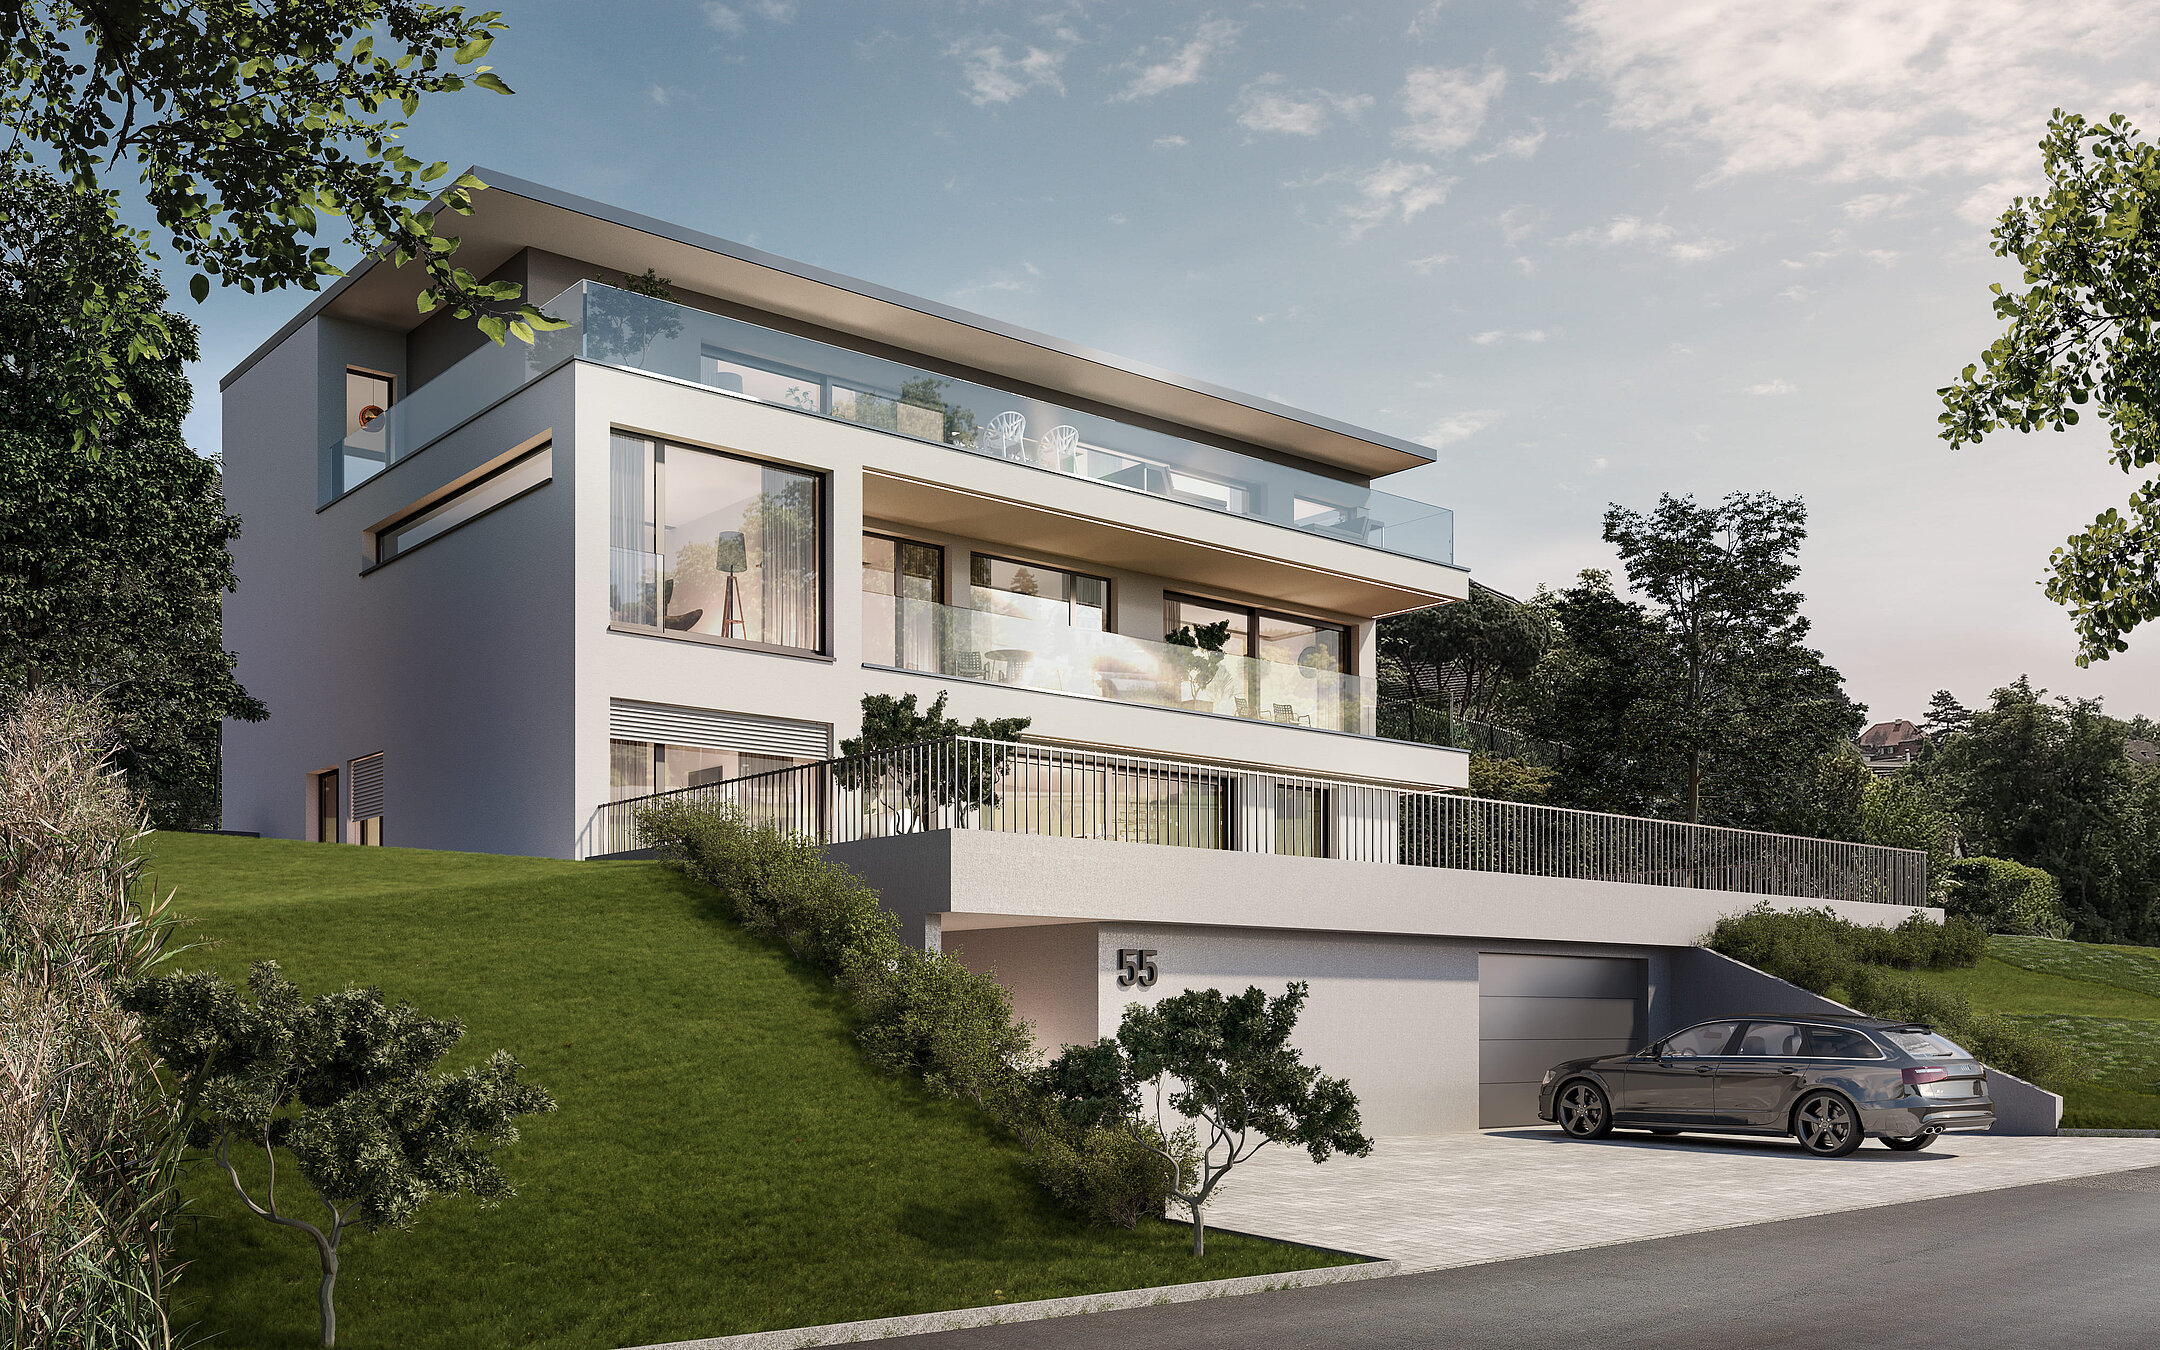 Mehrfamilienhaus WINSTON im 3D-Rendering